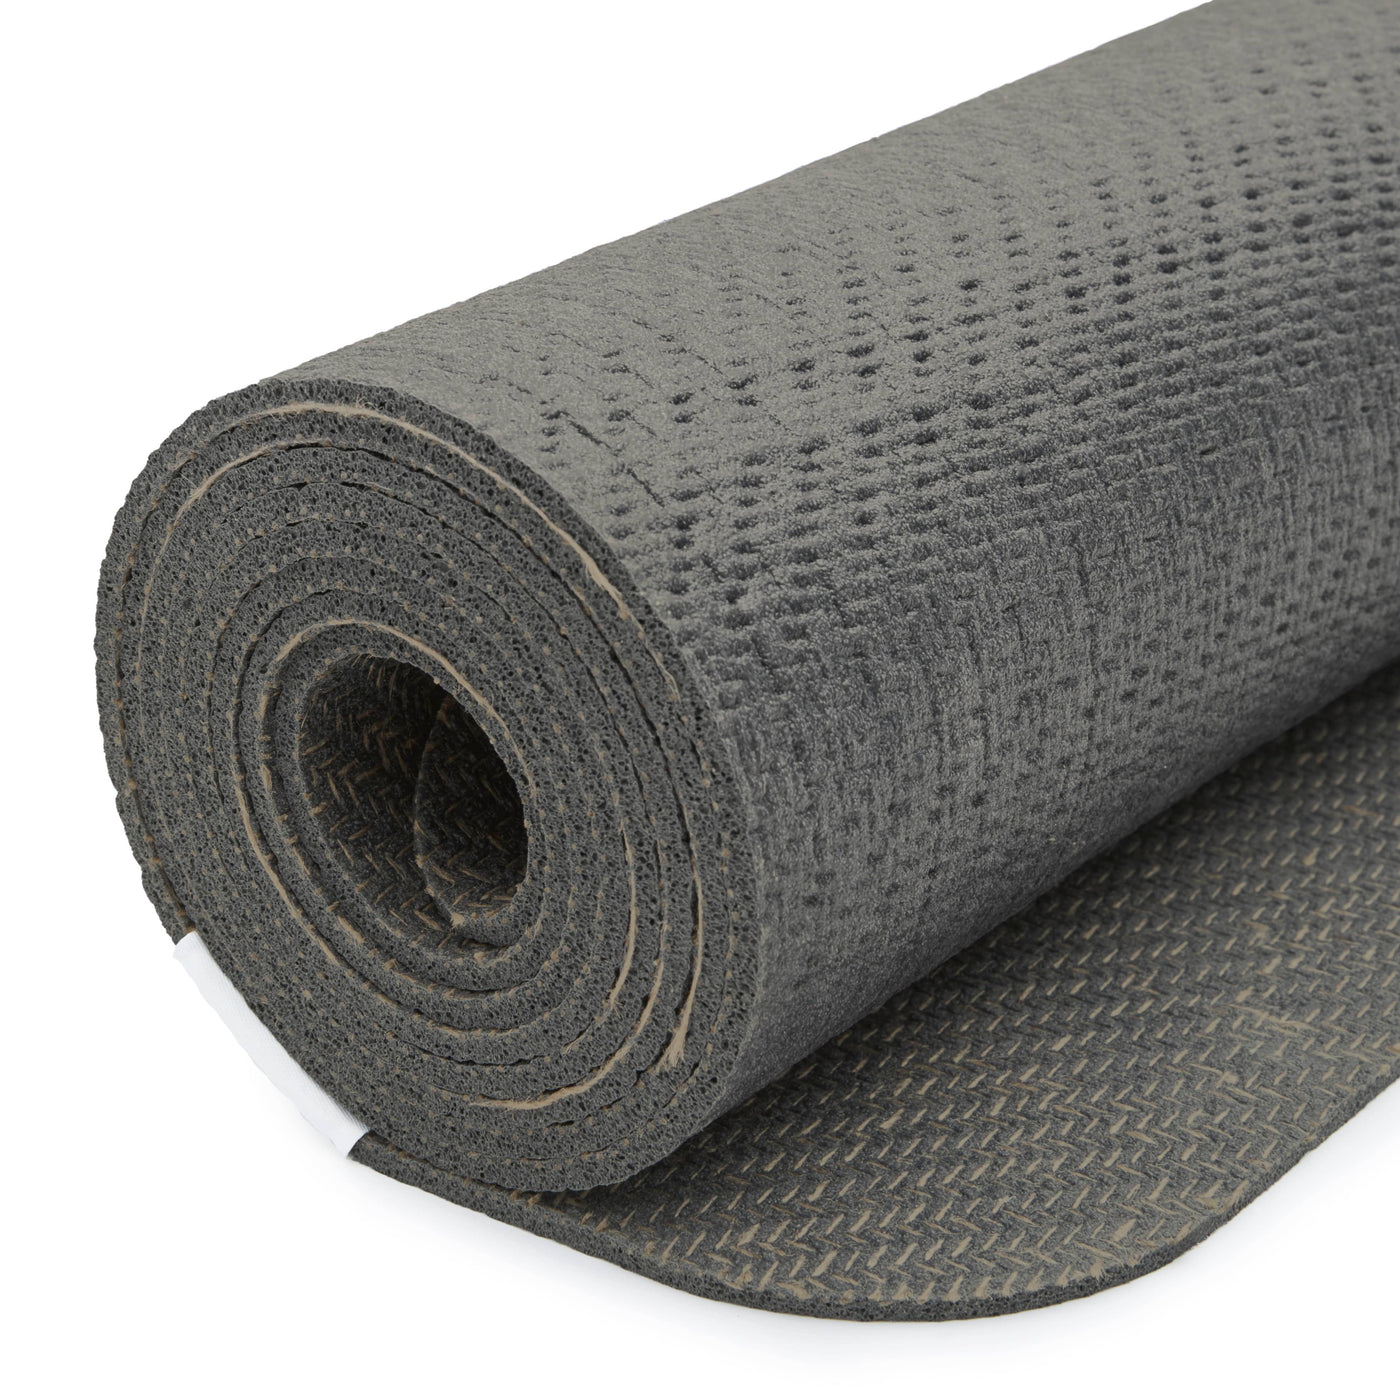 High Density Non Slip Yoga Mat 6x2 ft Size Mat in Grey Color 4MM